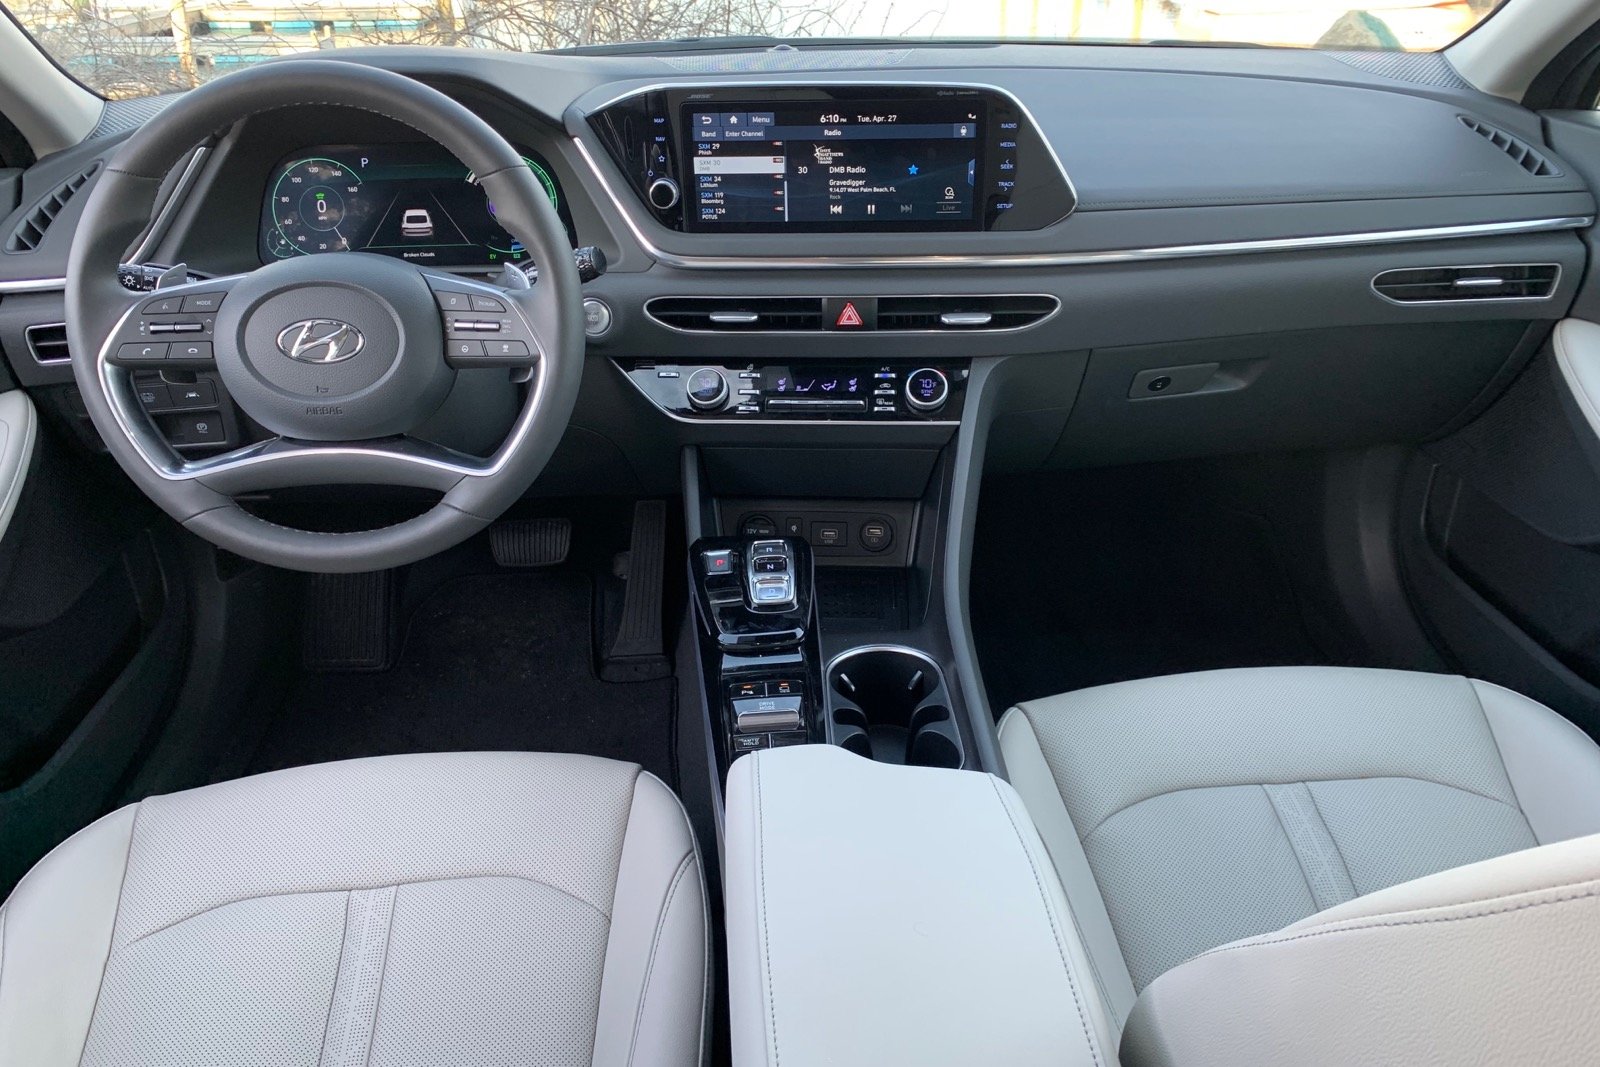 2021 Hyundai Sonata Hybrid Test Drive Review